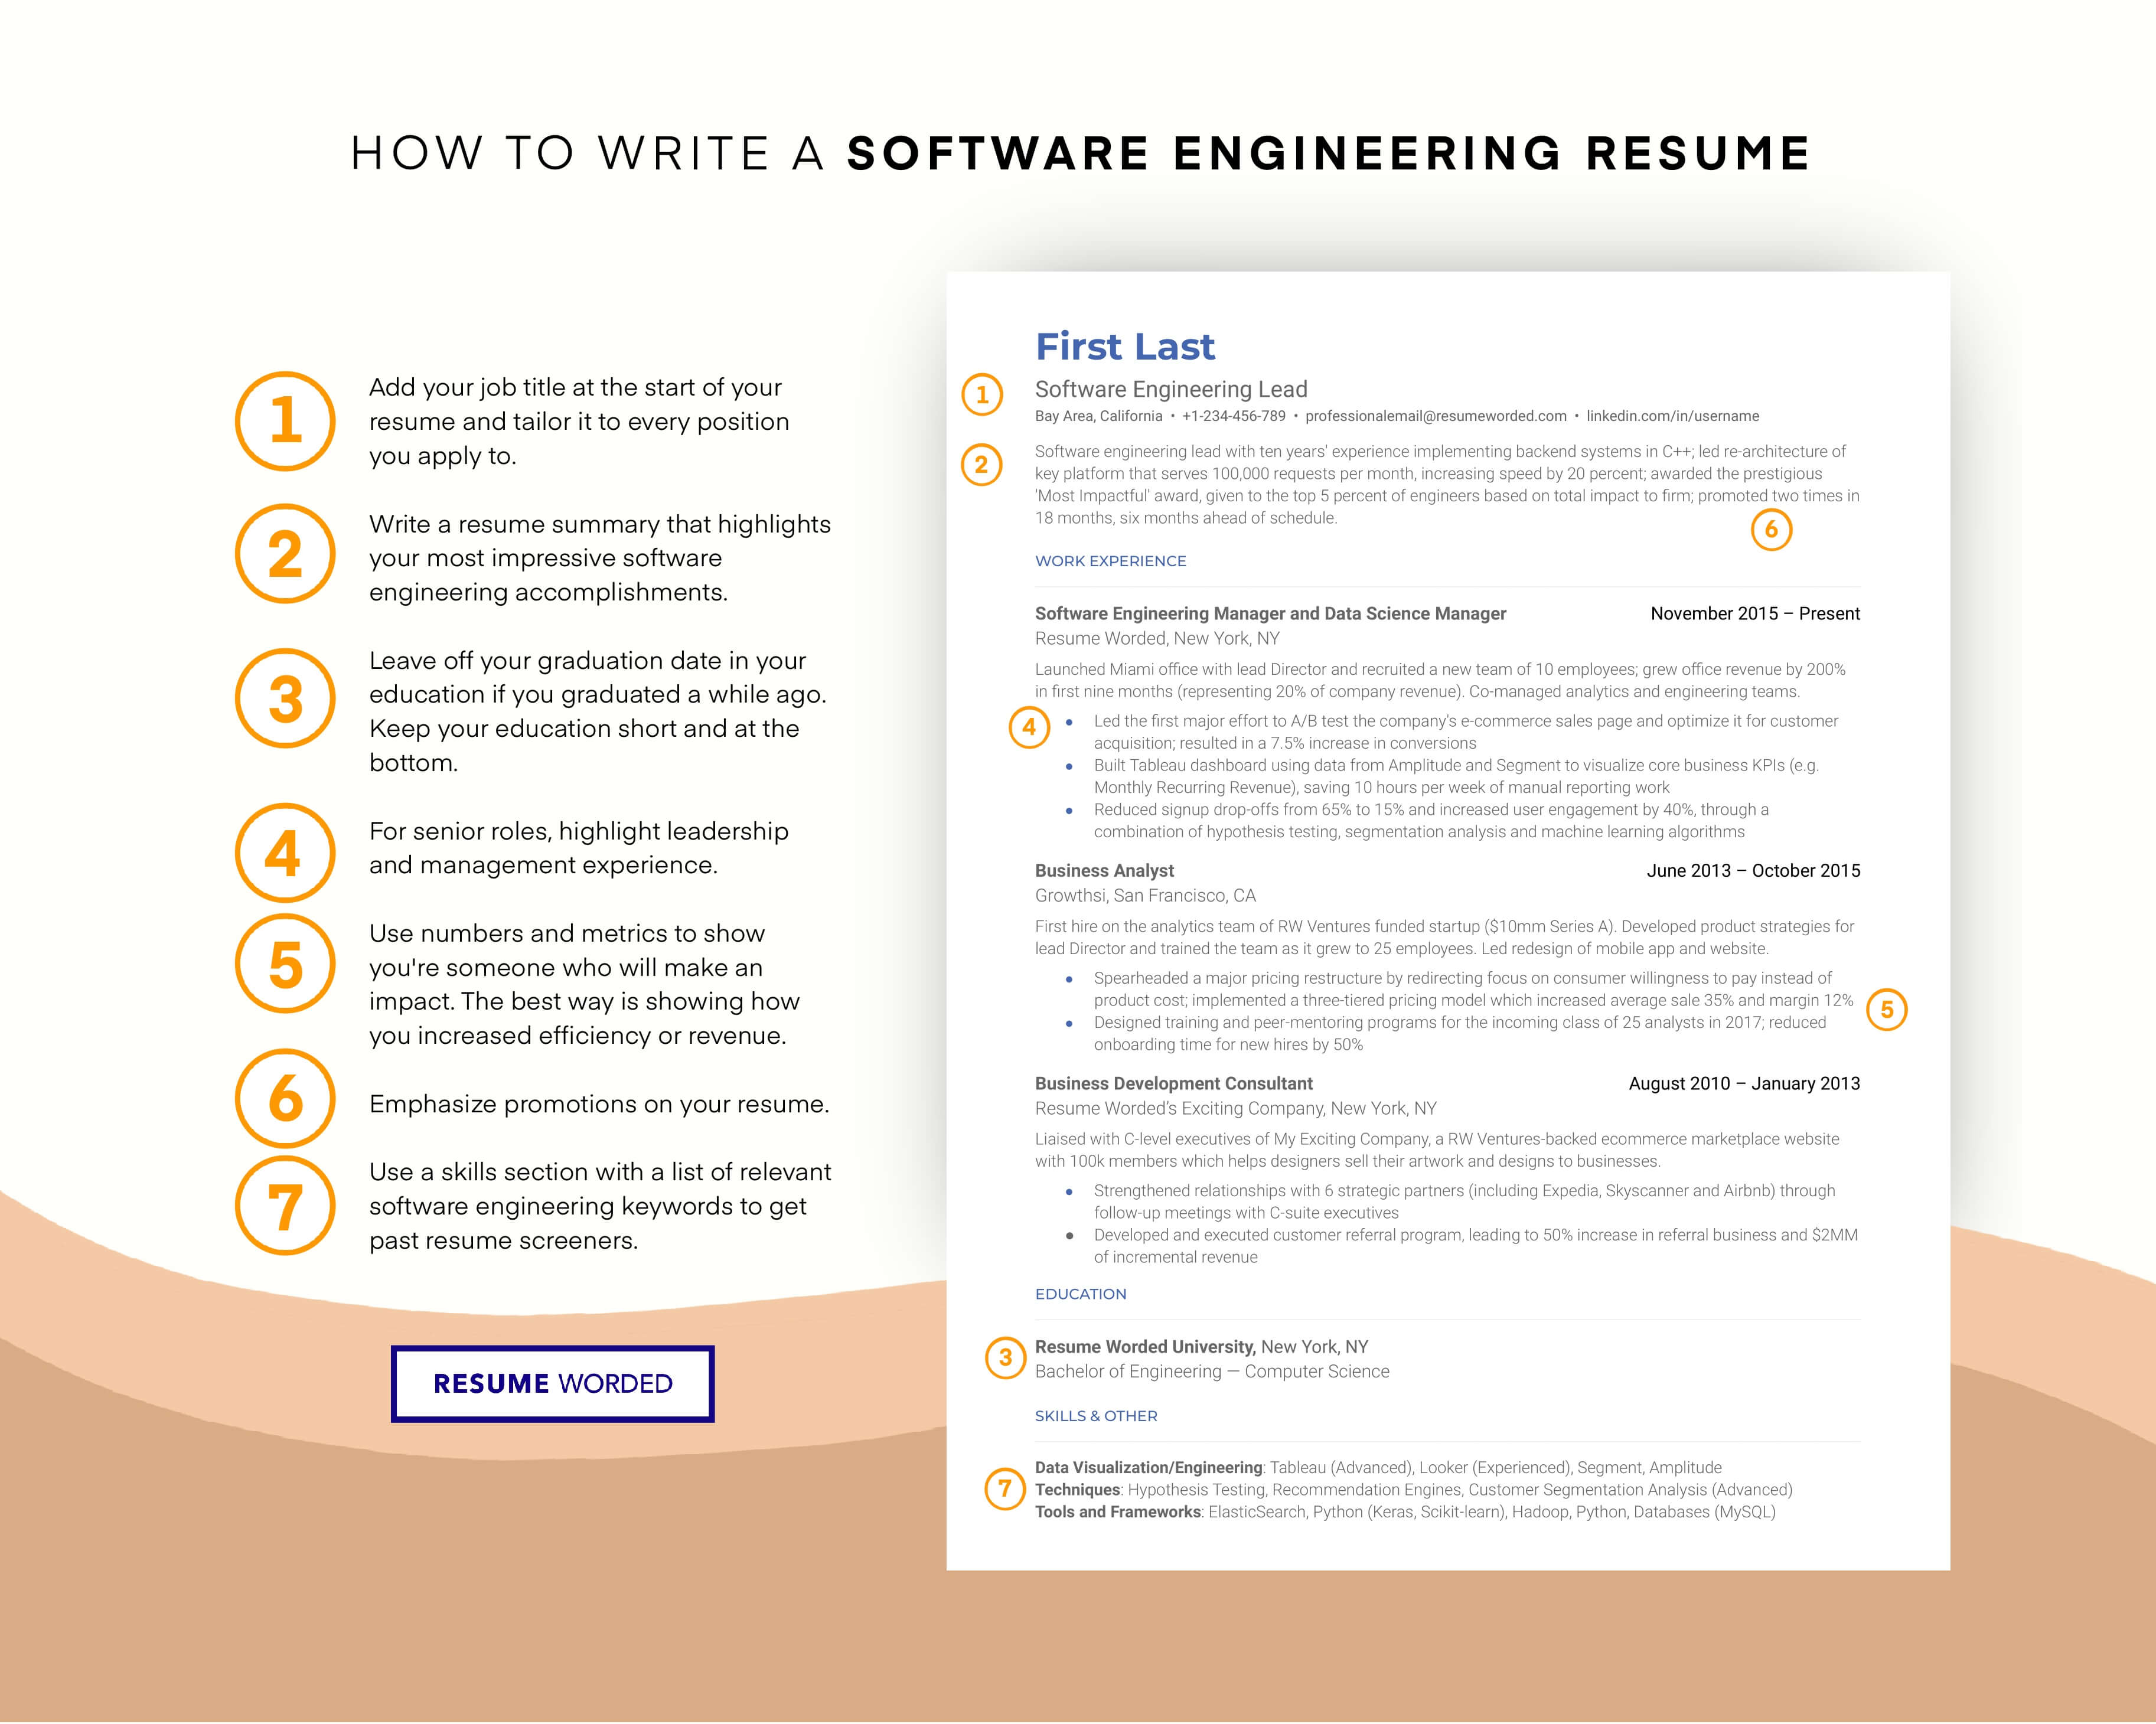 Emphasize BIM and software proficiency - Architect / Architecture Resume